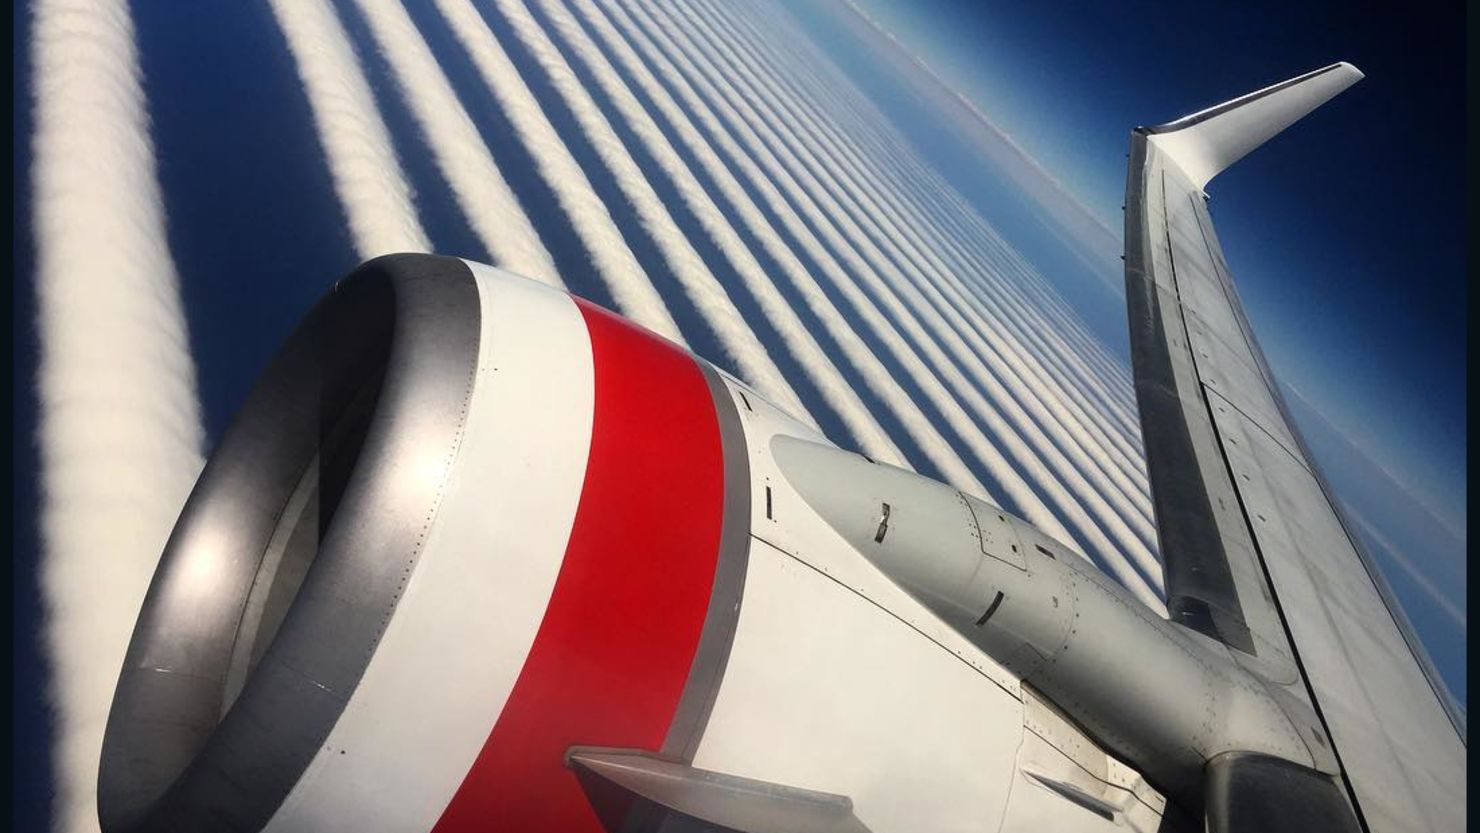 Ilya Katsman was on a flight across Australia when he photographed the spectacular clouds.